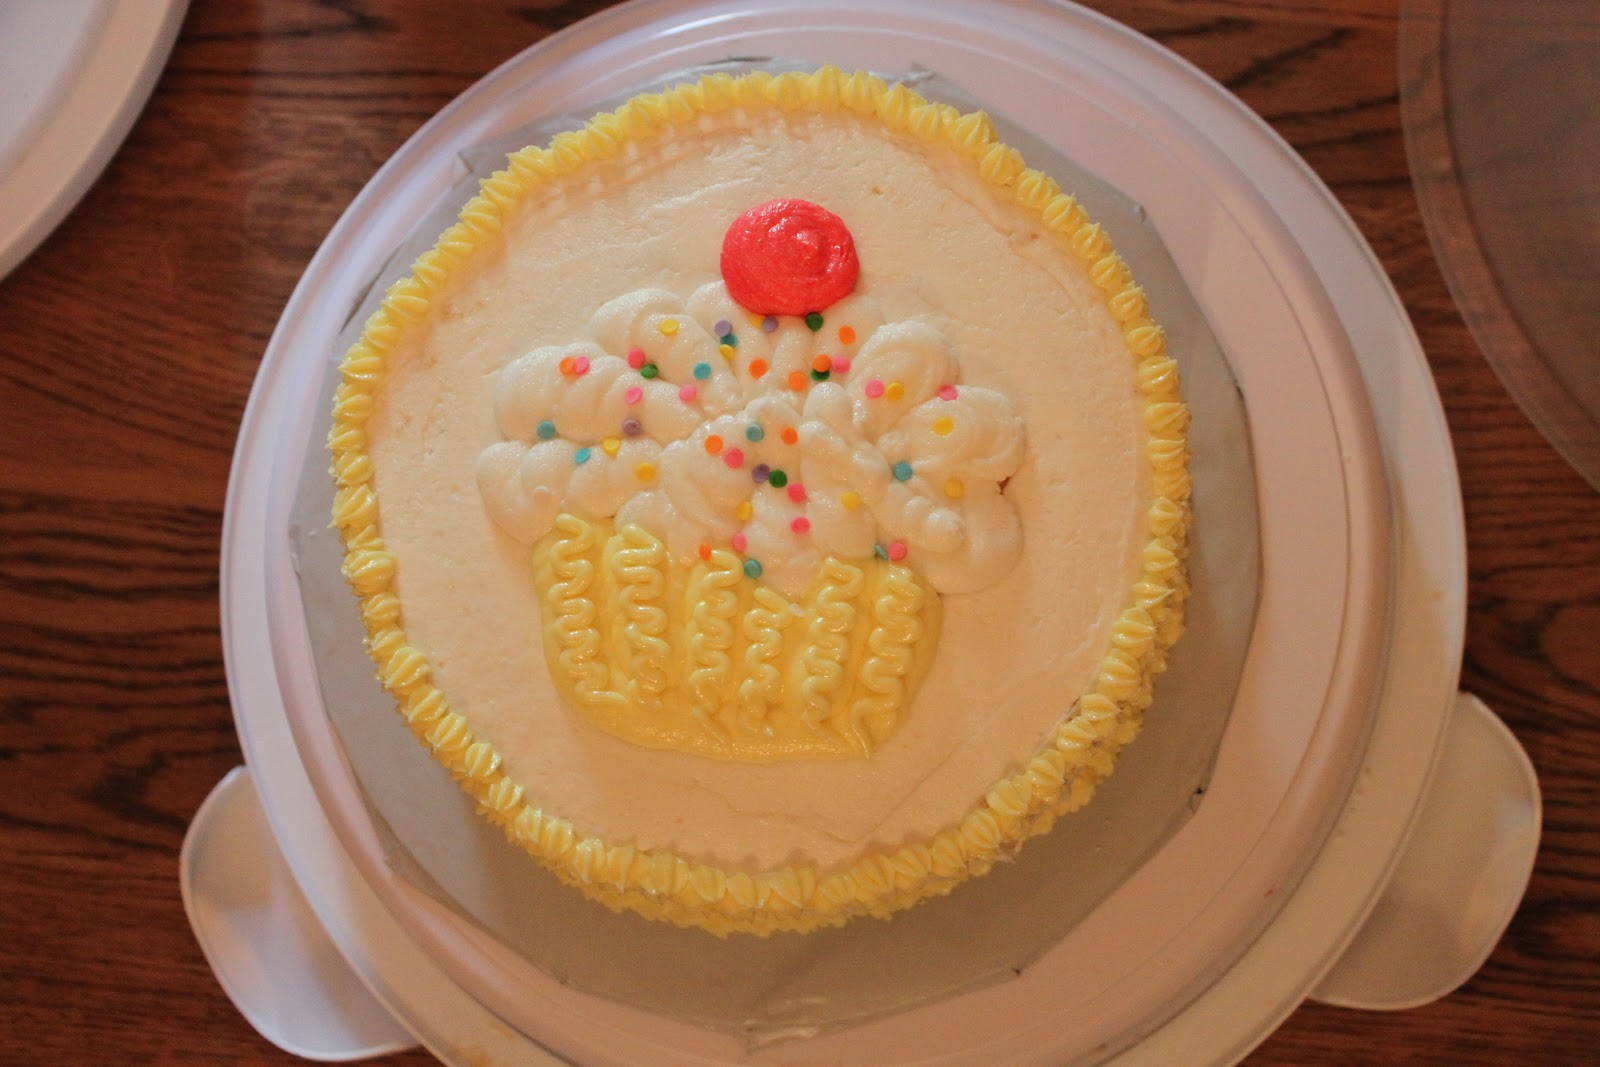 Aunt B's Cookin': Lesson 2- Wilton Cake Decorating Class